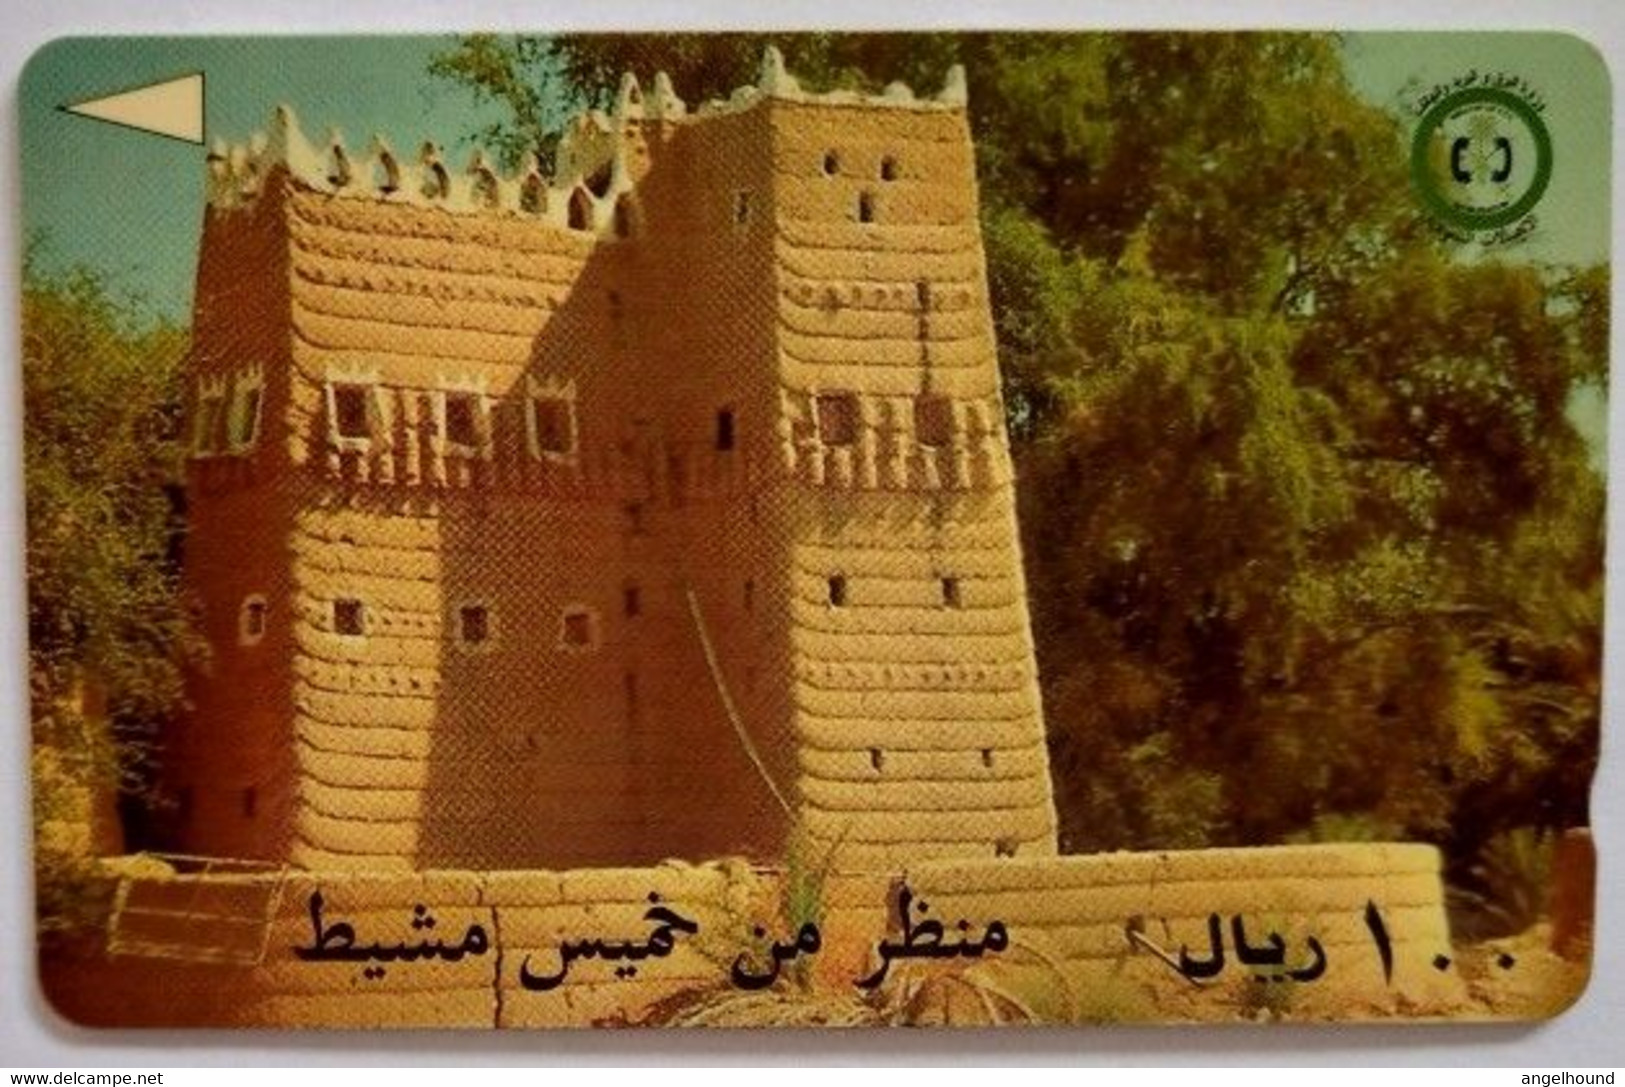 Saudi Arabia  SAUDF 100 Riyals  " Khamis Mushait Fort " - Saudi-Arabien